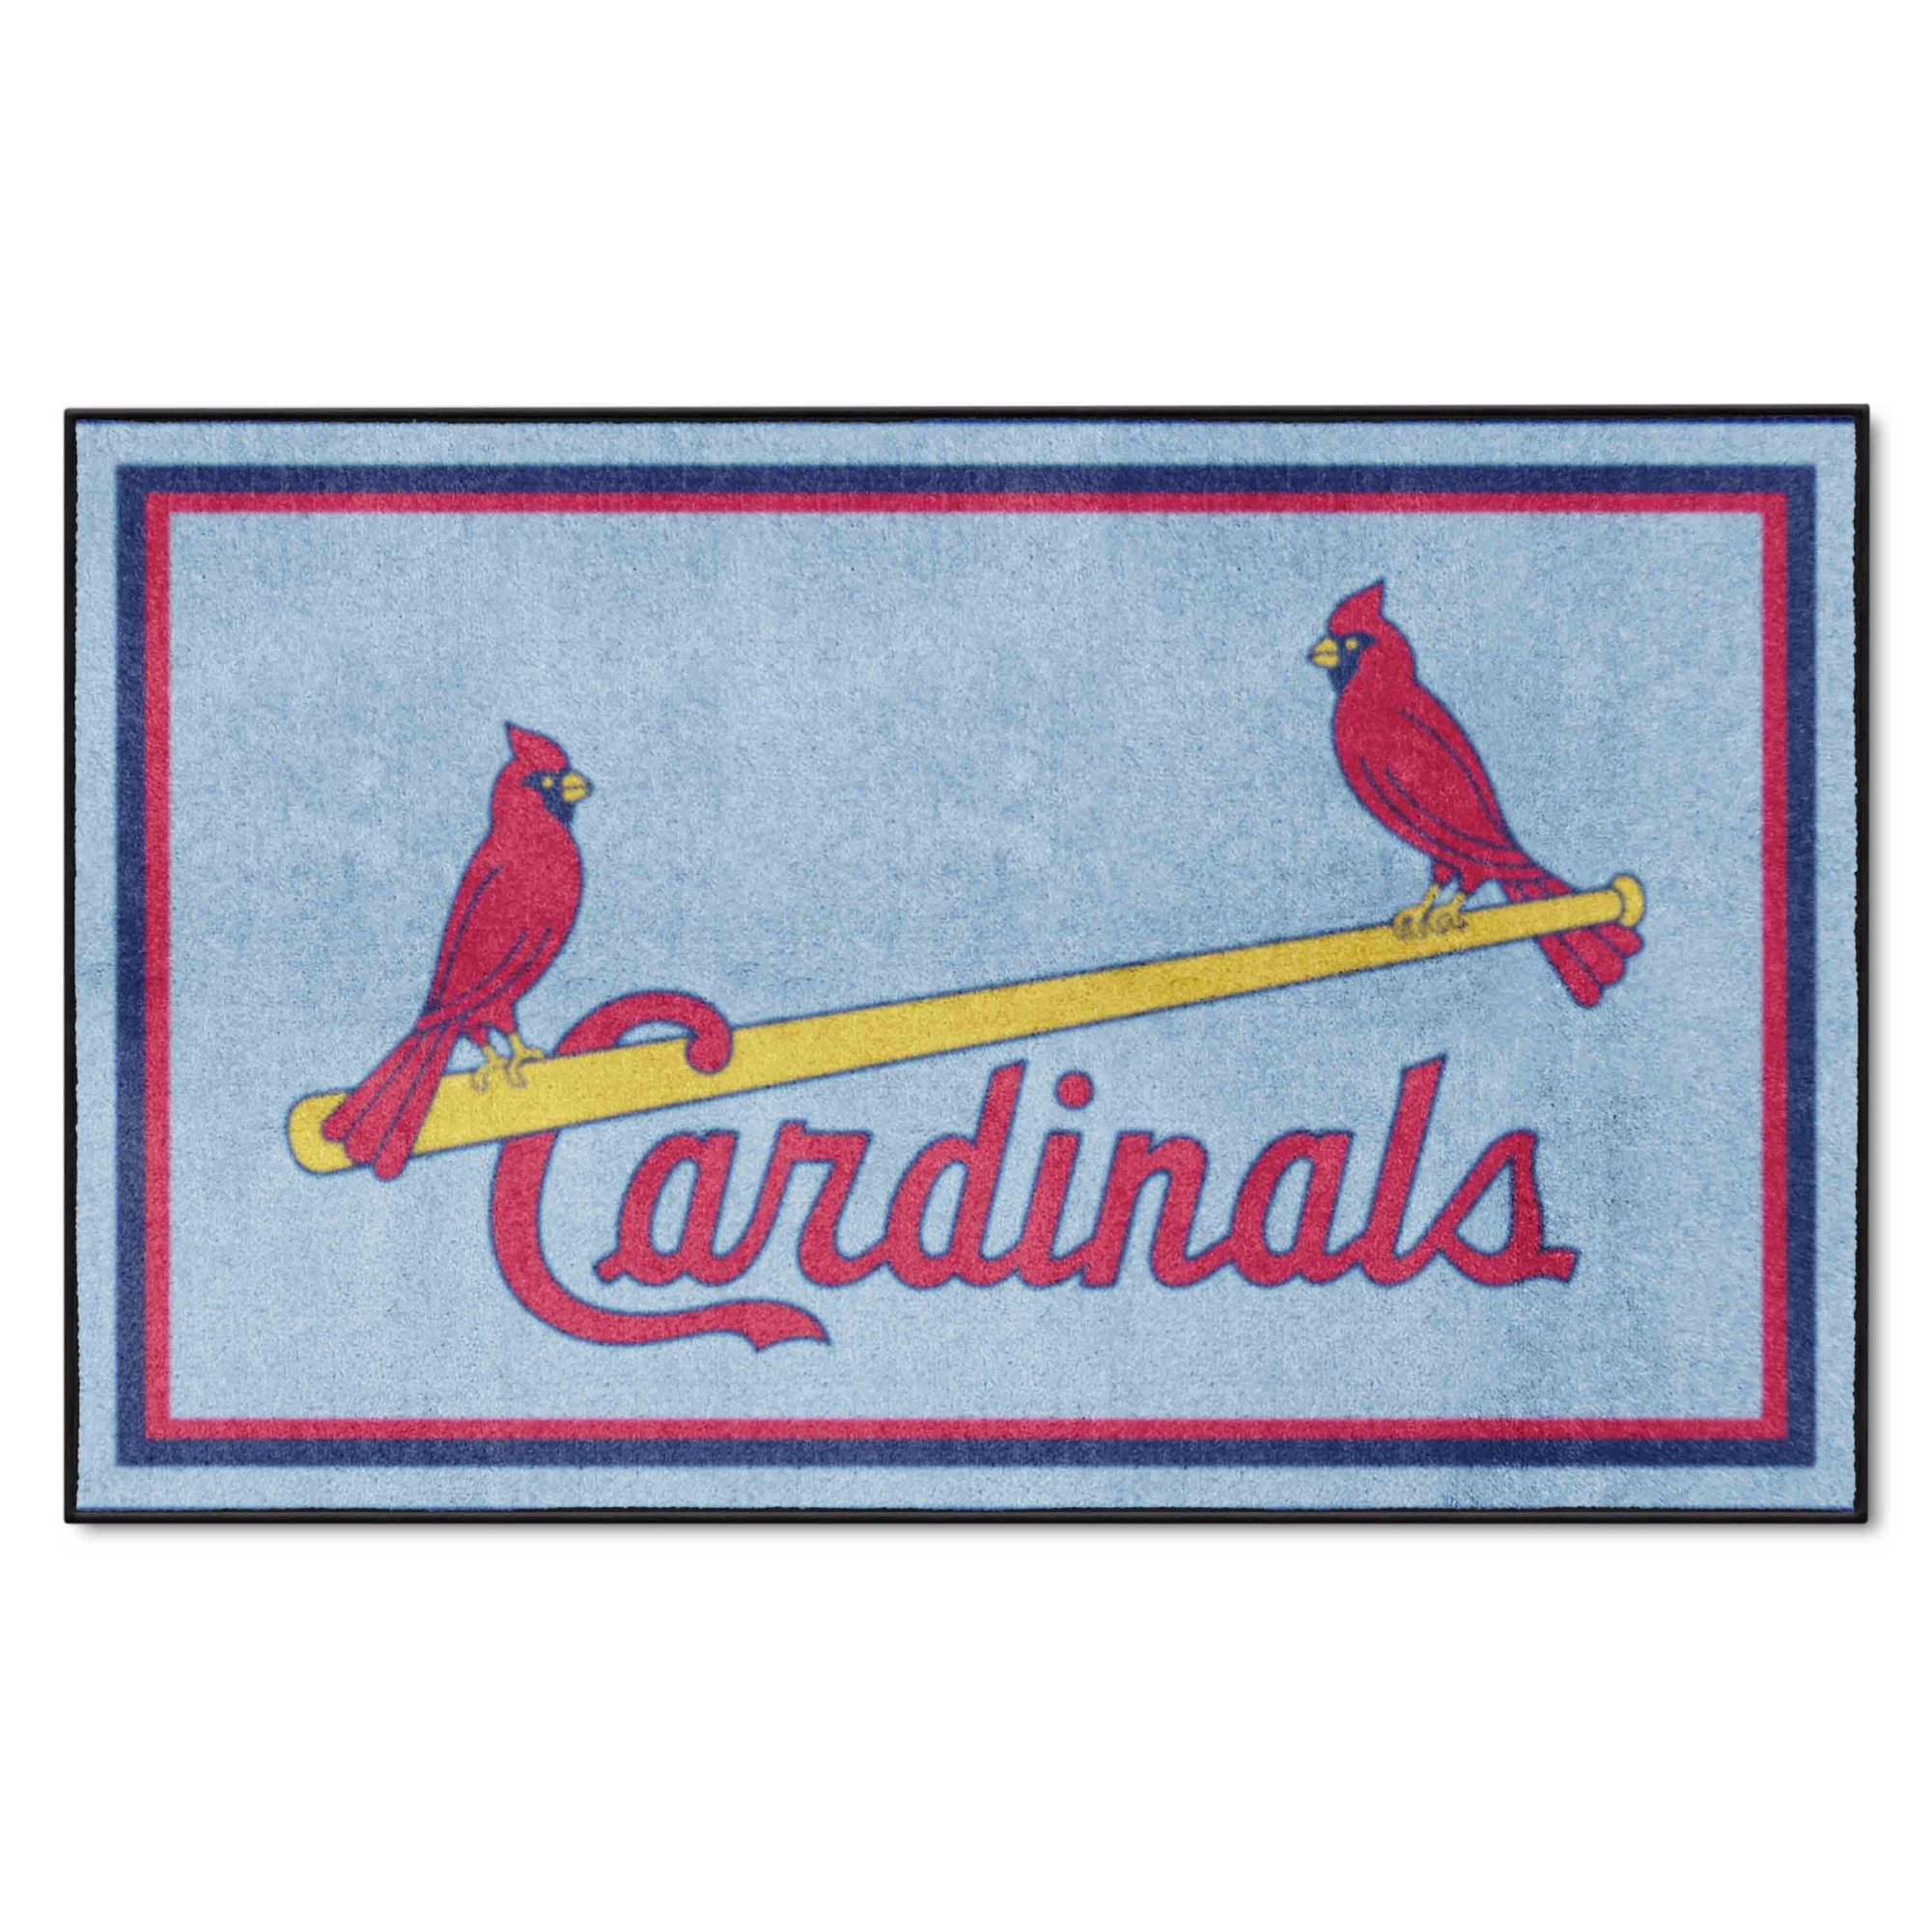 MLB St. Louis Cardinals 4'x6' 1976 Retro Collection Plush Area Rug